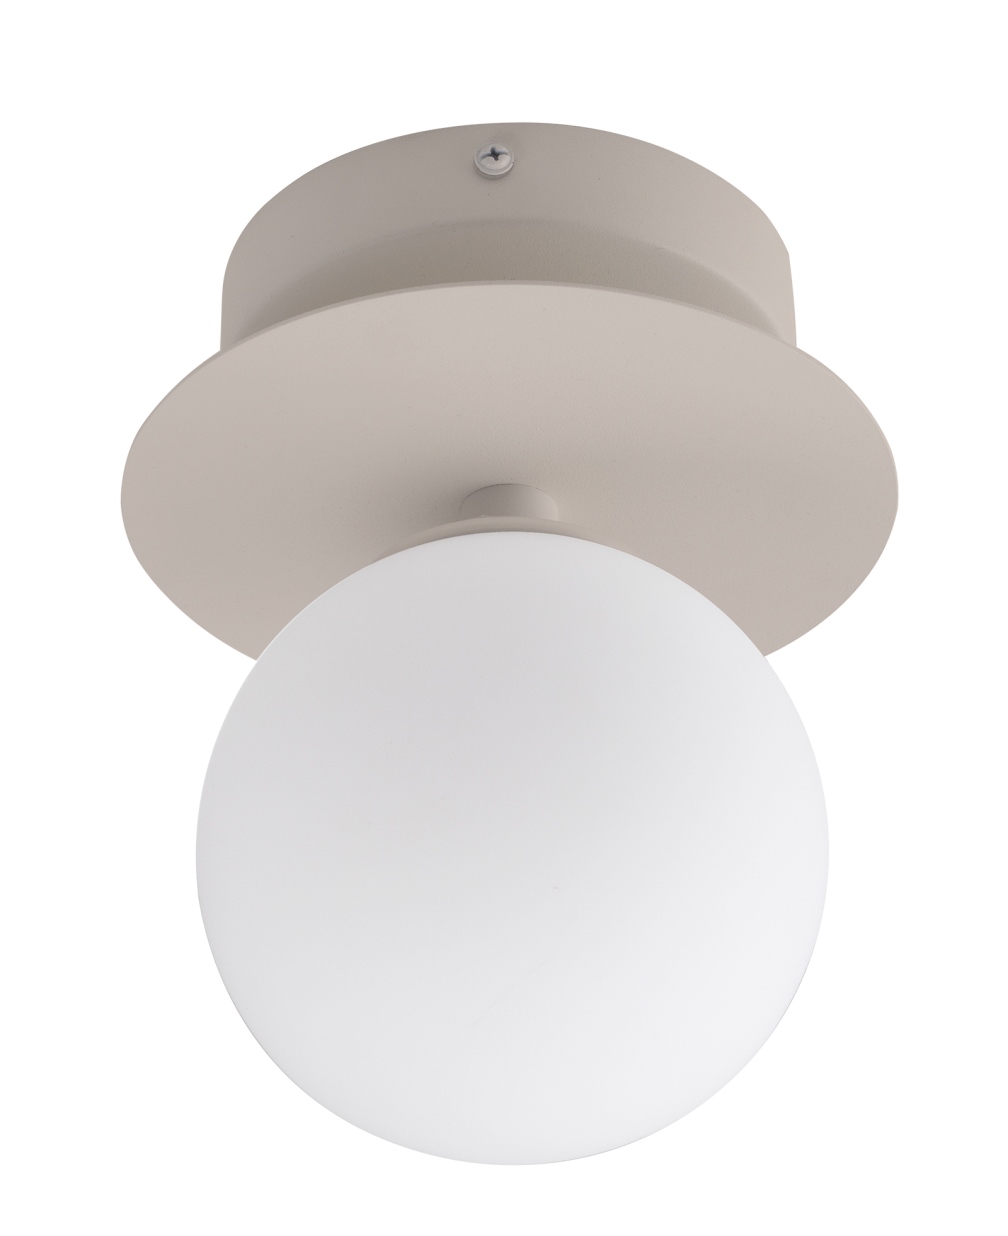 Globen Lighting Art Deco 24 Vägglampa/Plafond IP44 Beige